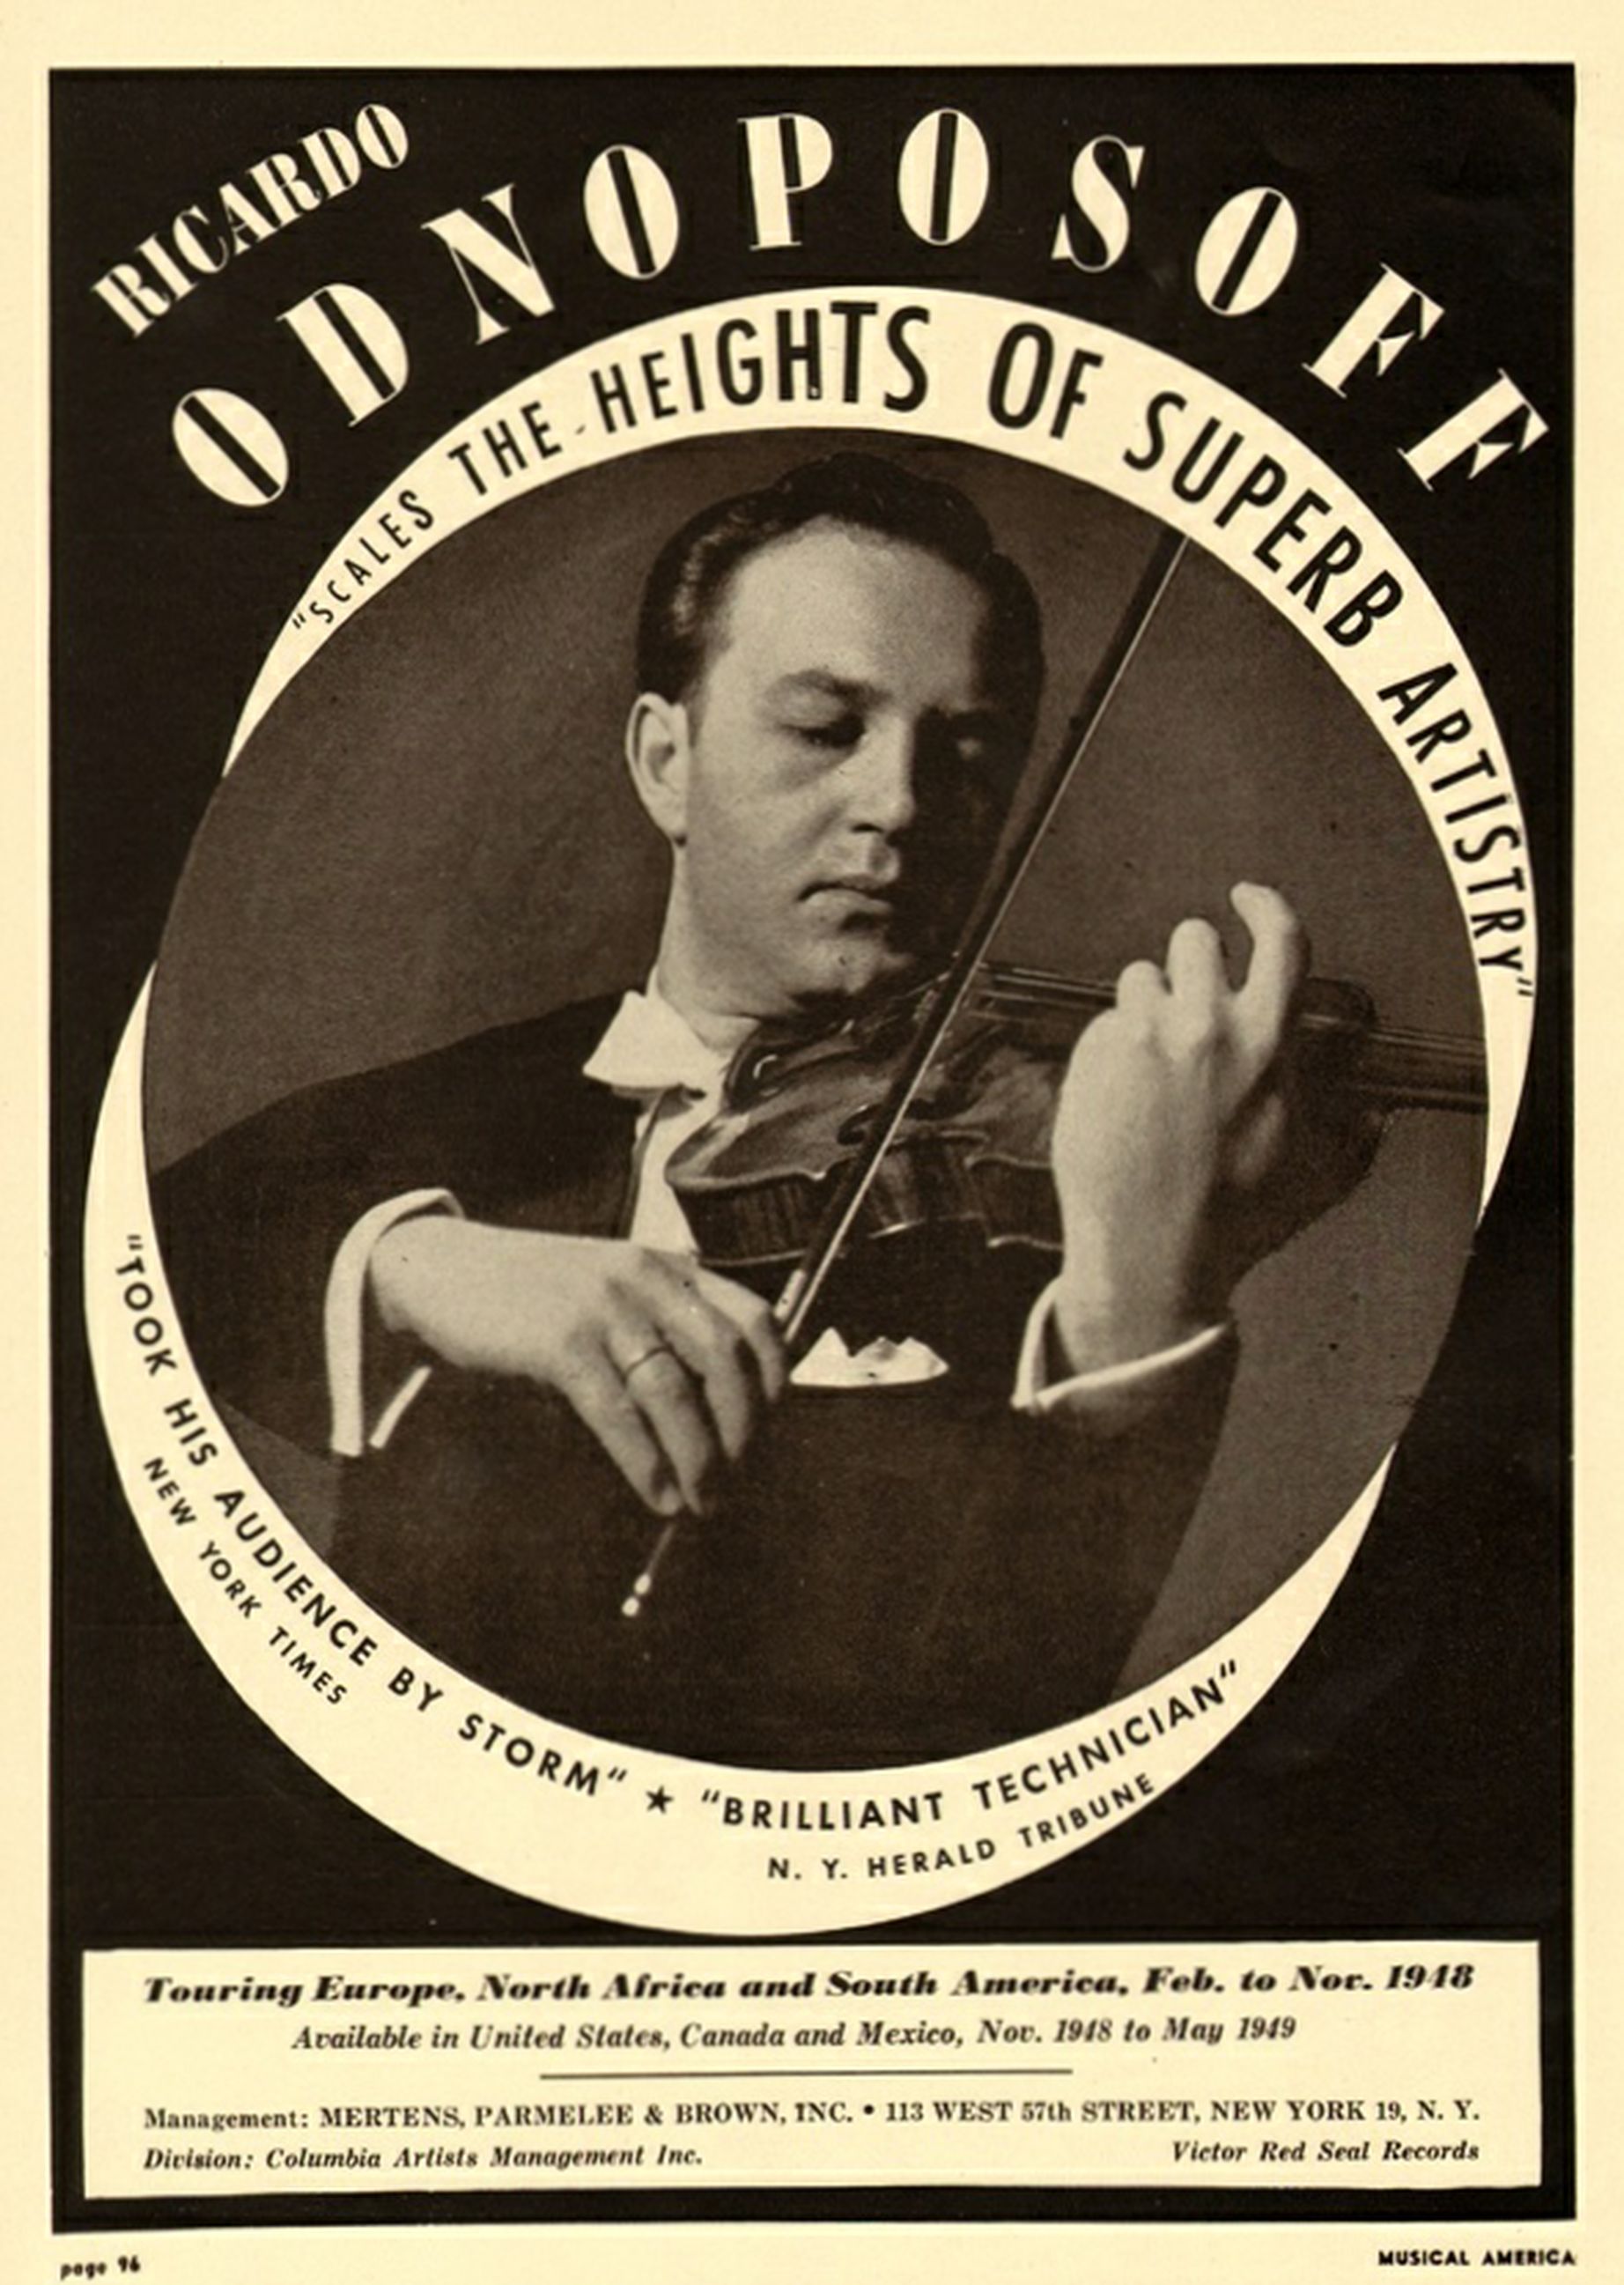 Ricardo Odnoposoff, insert publicitaire 1948